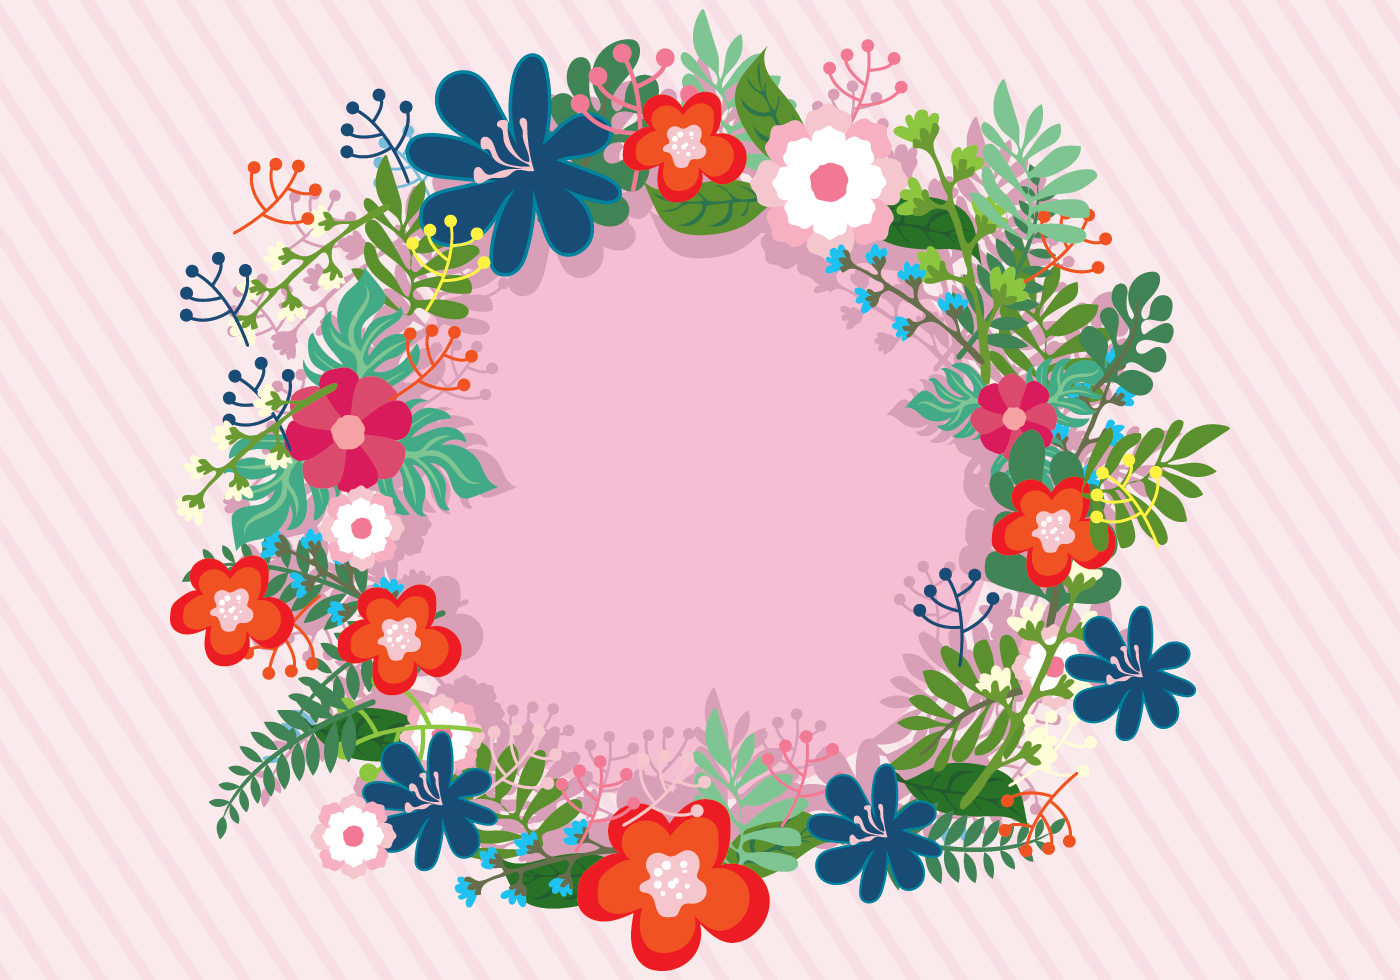 Download Floral Spring Wreath 179583 - Download Free Vectors ...